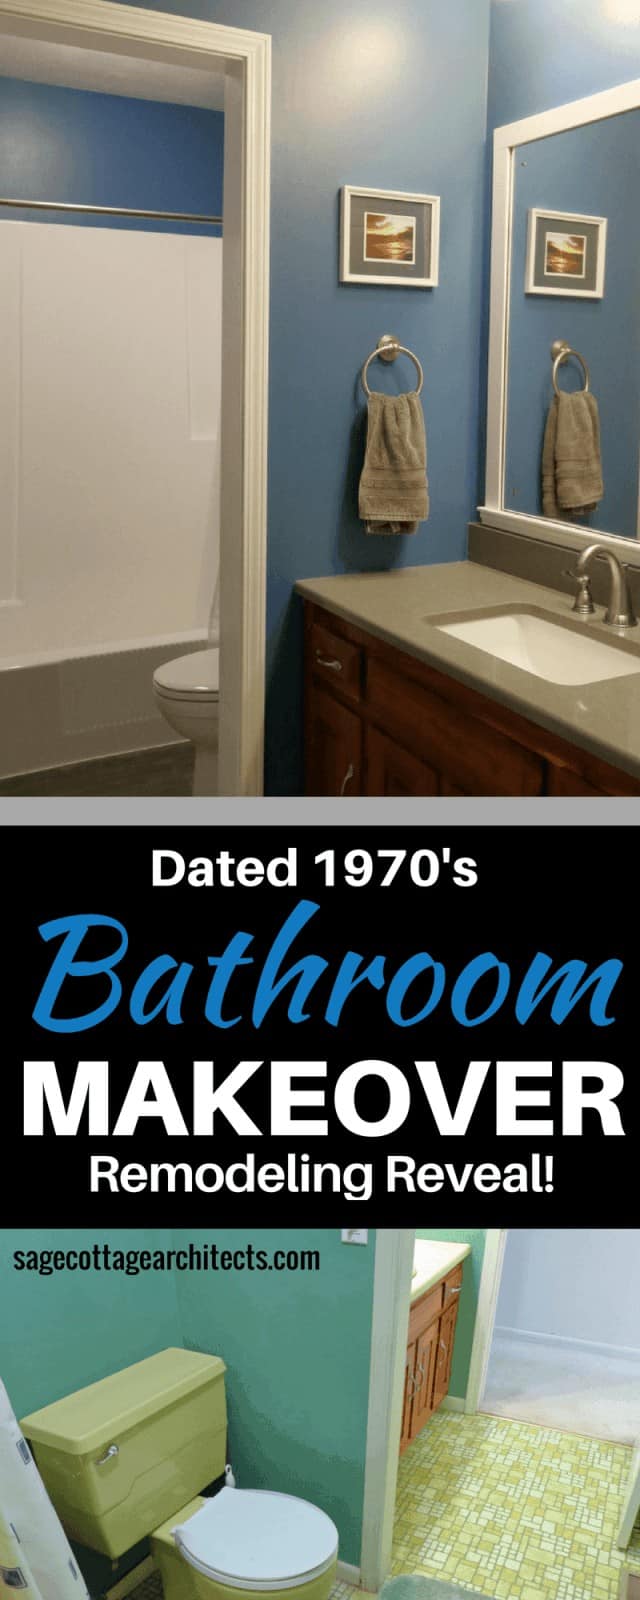 Photo collage - 1970's yellow bathroom remodel transformed into modern, dark blue and grey bathroom